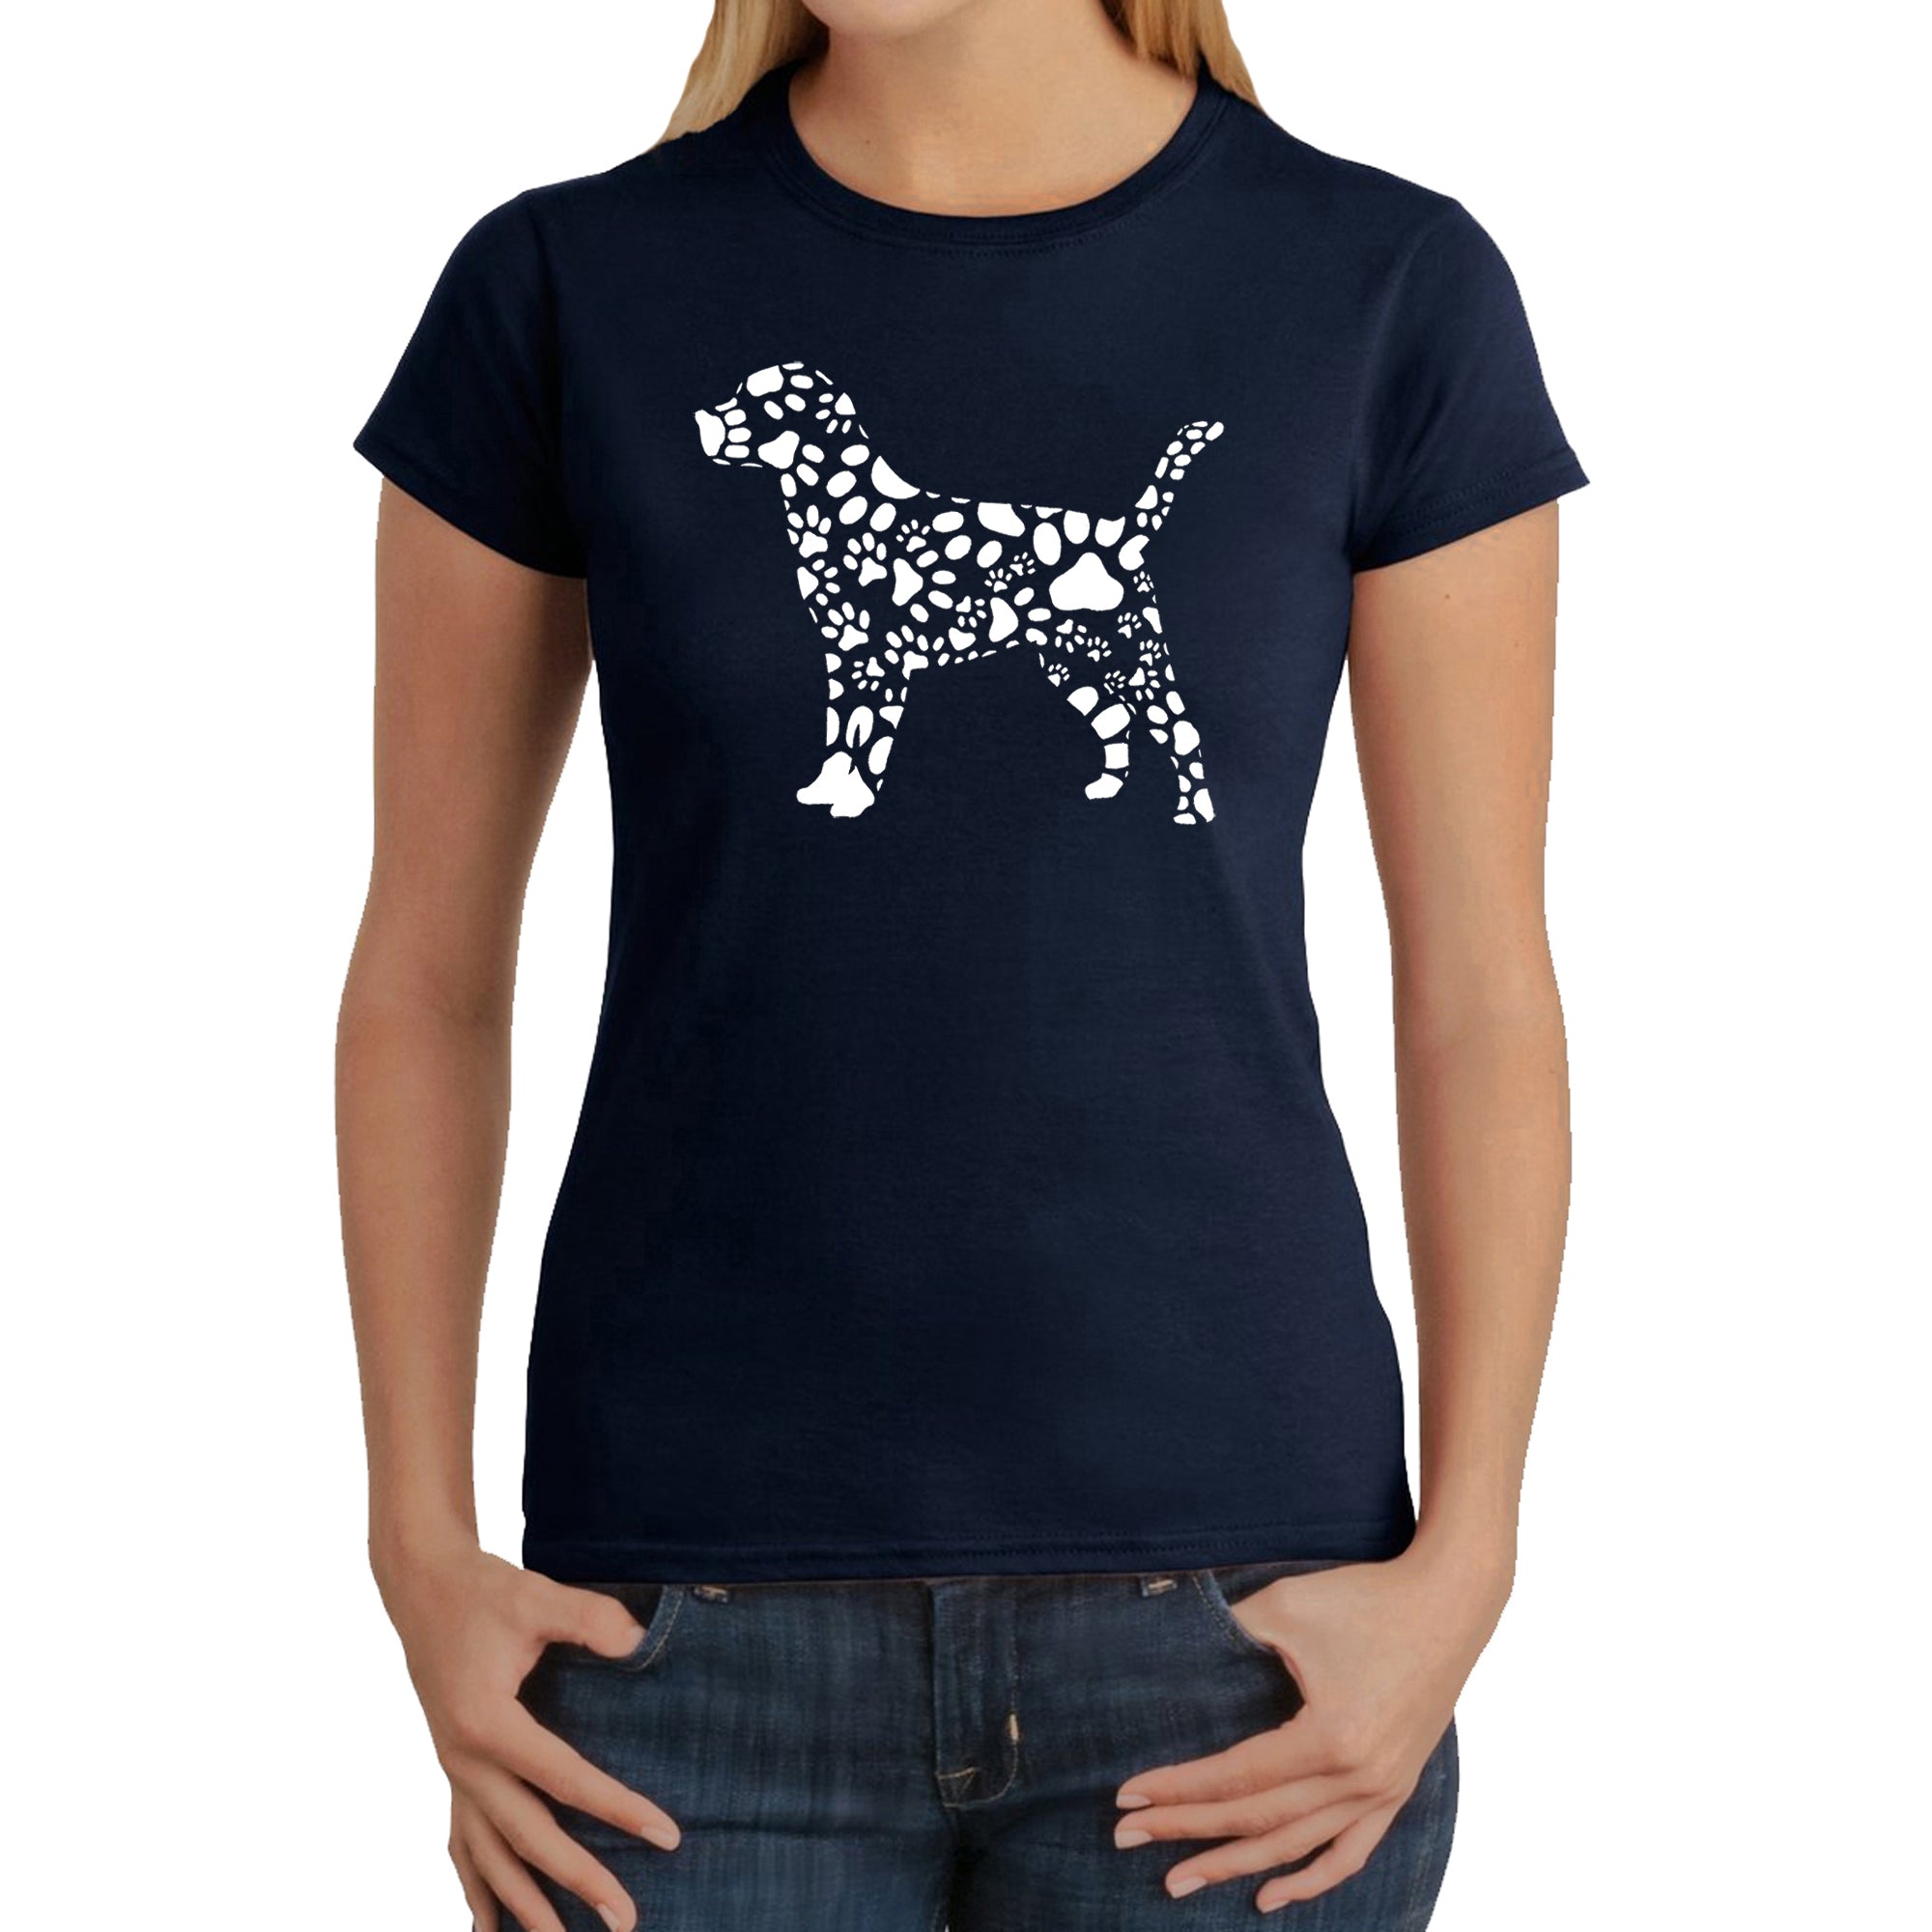 Dog Paw Prints - Women's Word Art T-Shirt - Navy - X-Large